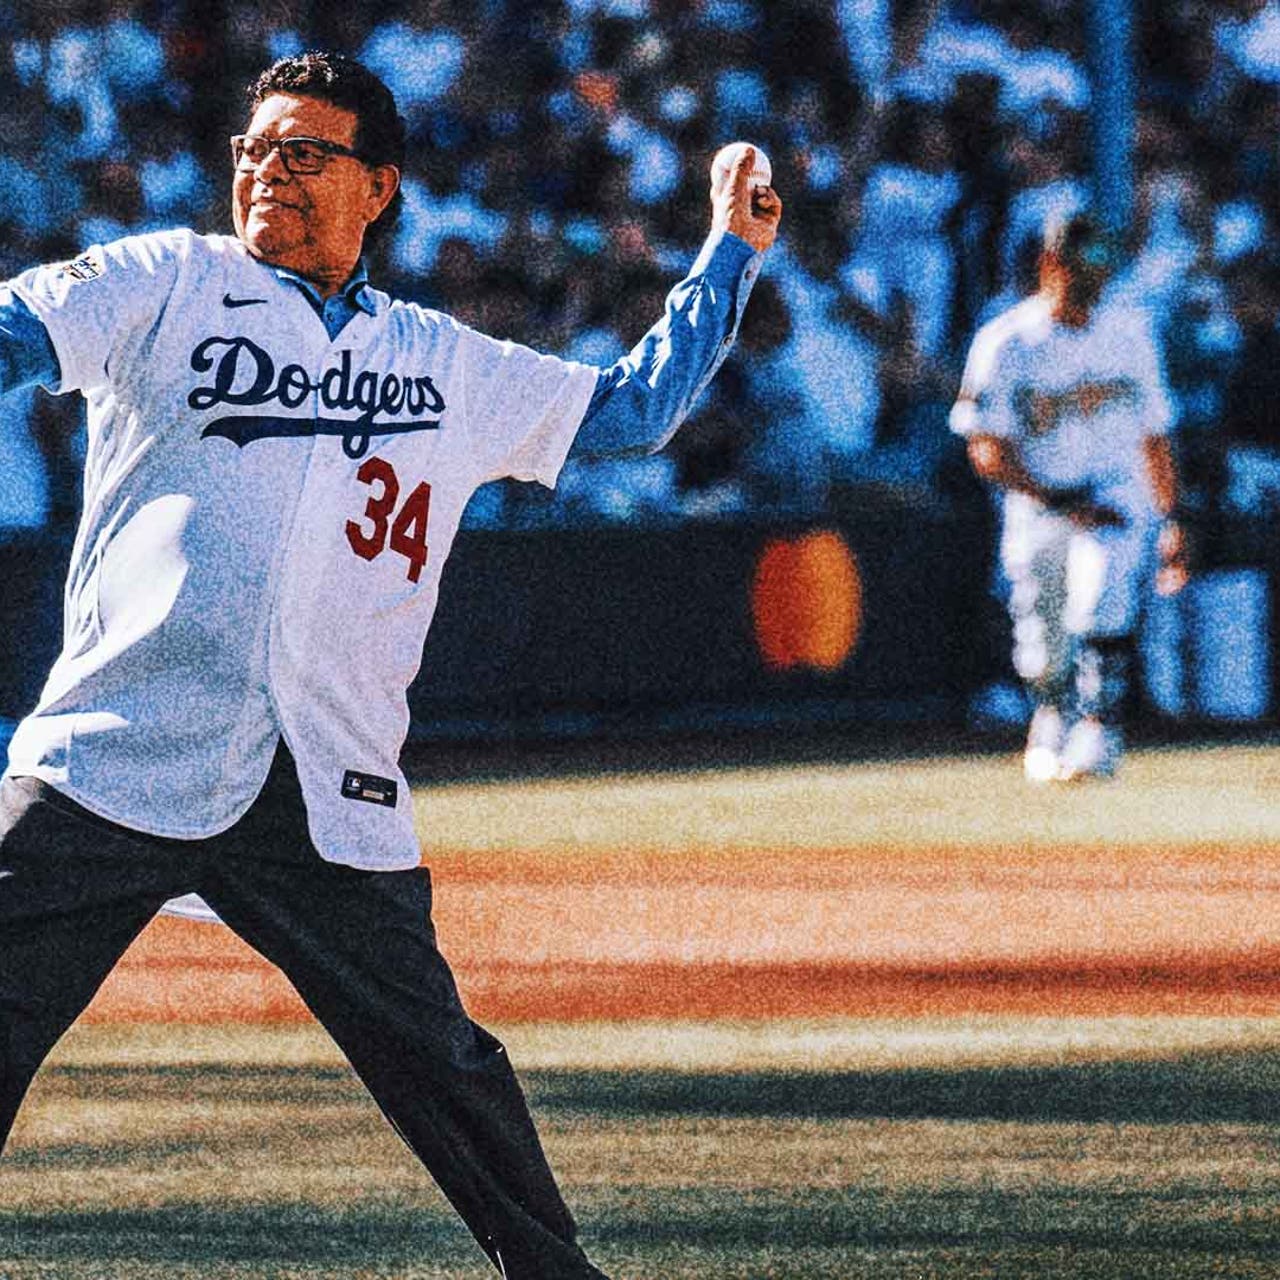 Dodgers to retire pitcher Fernando Valenzuela's No. 34